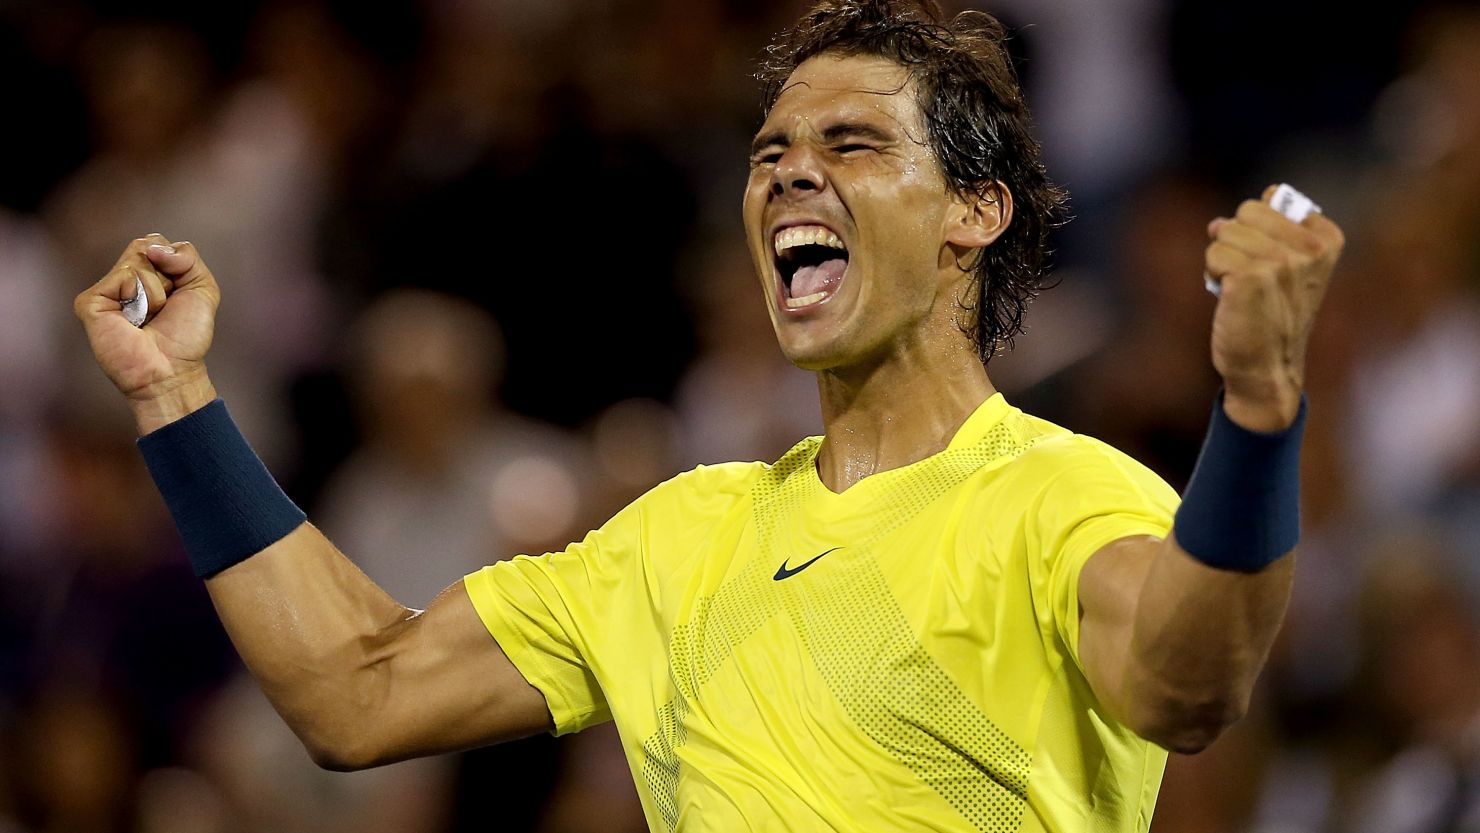 Rafael Nadal celebrates his win over Novak Djokovic at Uniprix Stadium in Montreal, Quebec, Canada.